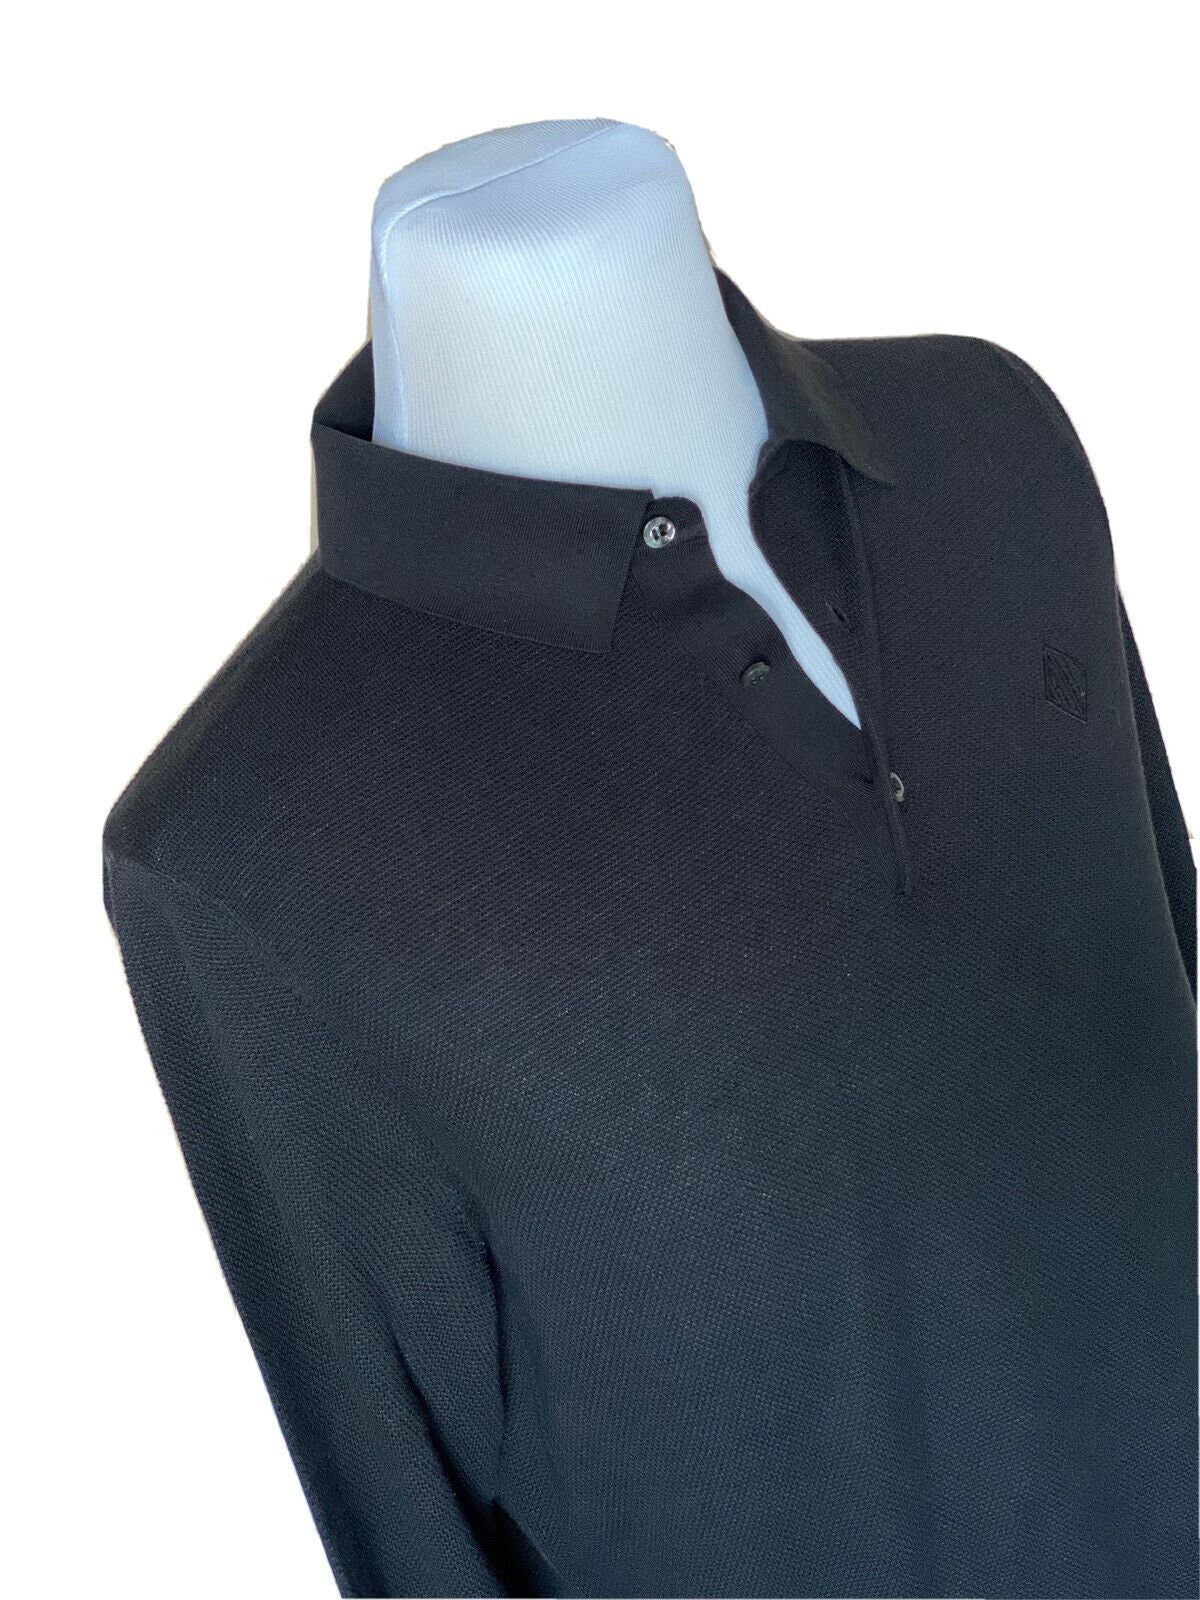 NWT $695 Ralph Lauren Purple Label Silk/Cotton Black Polo Shirt L Italy